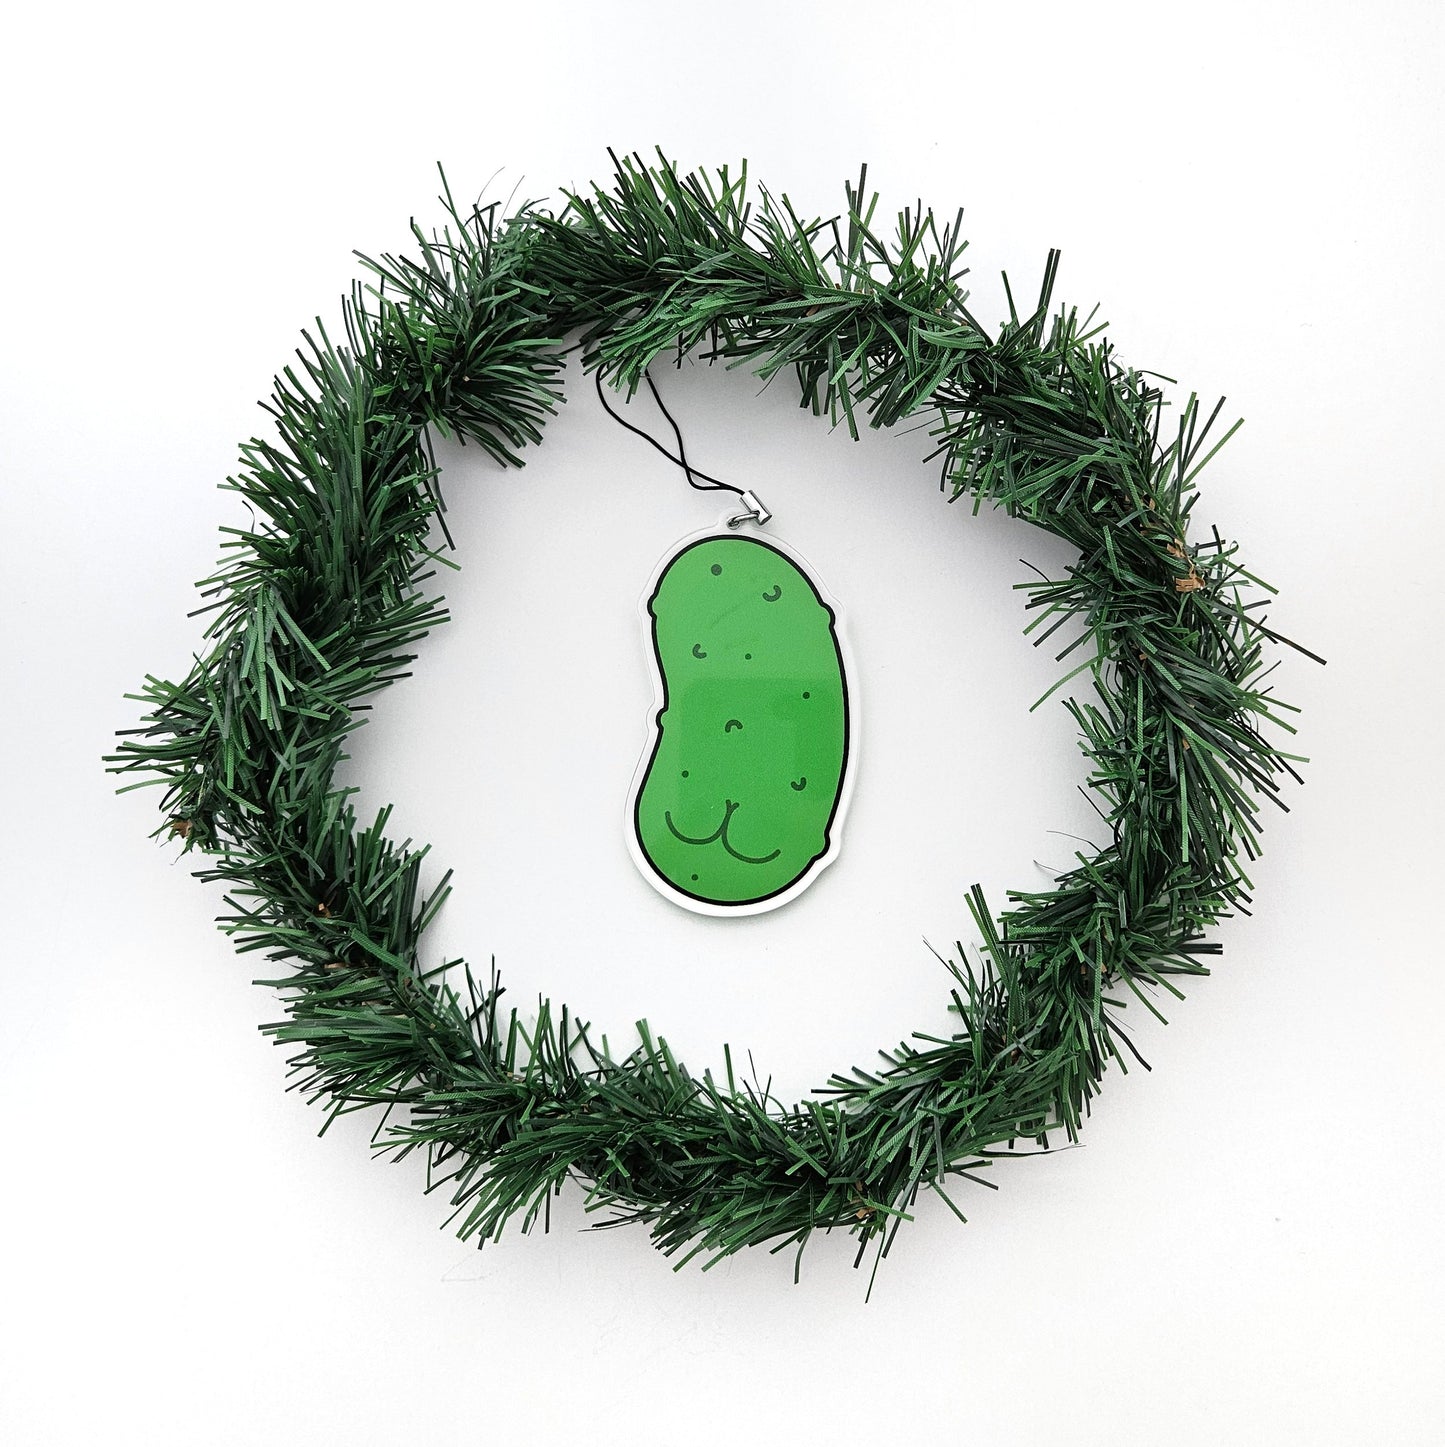 Christmas Pickle acrylic ornament